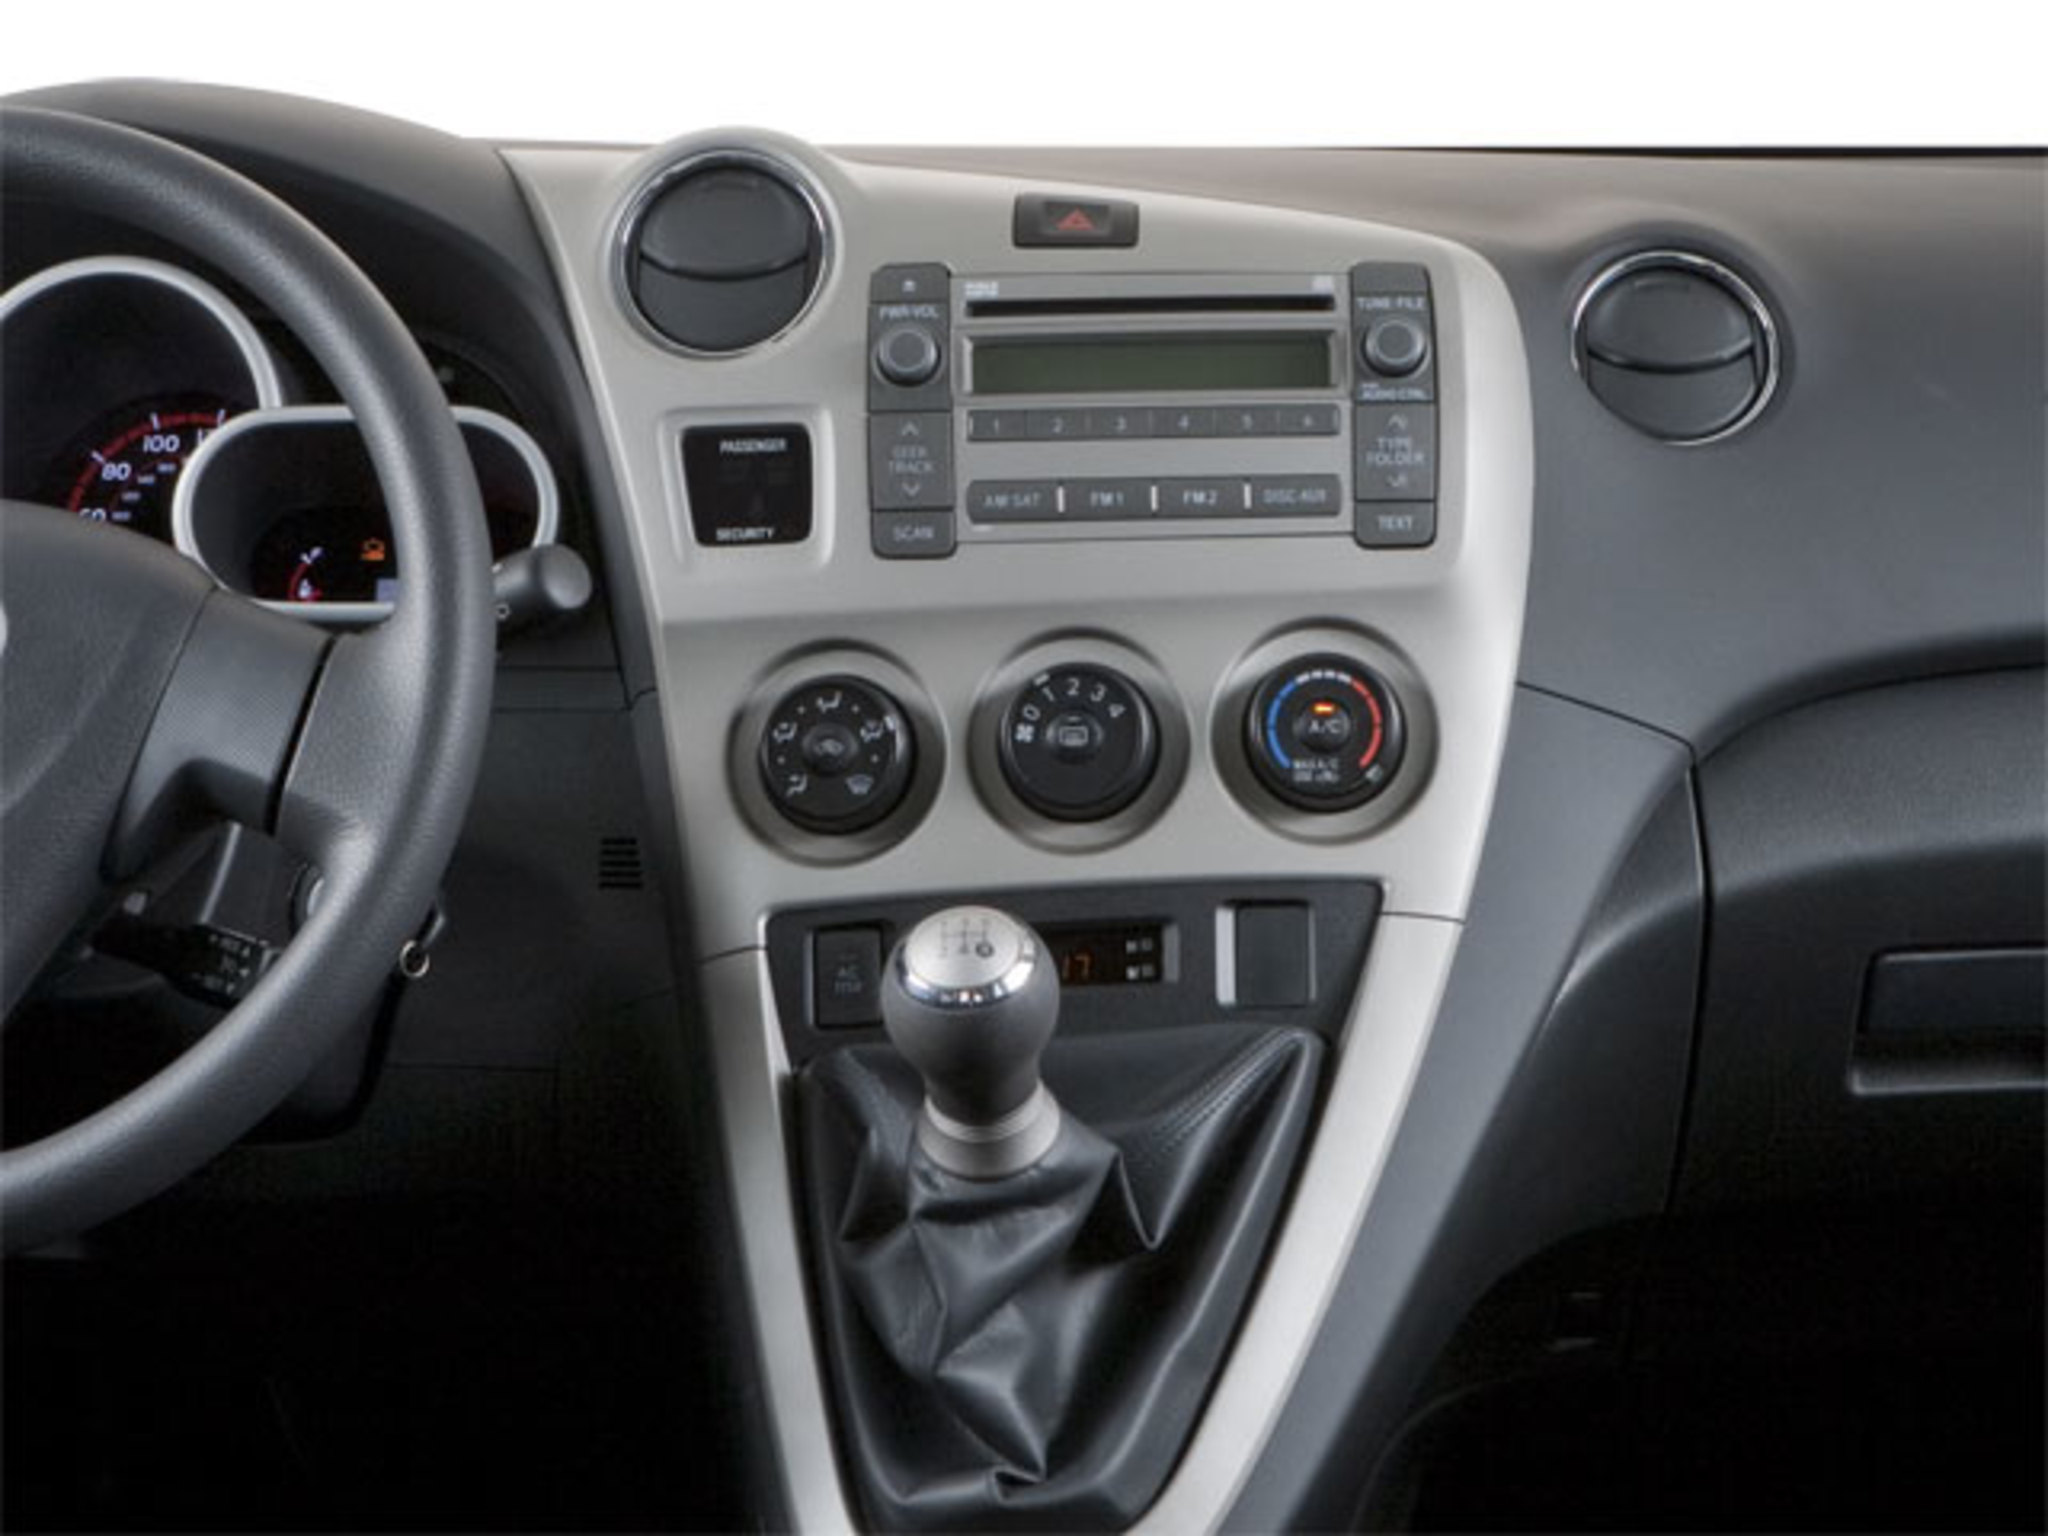 2010 Toyota Matrix Compare Prices Trims Options Specs